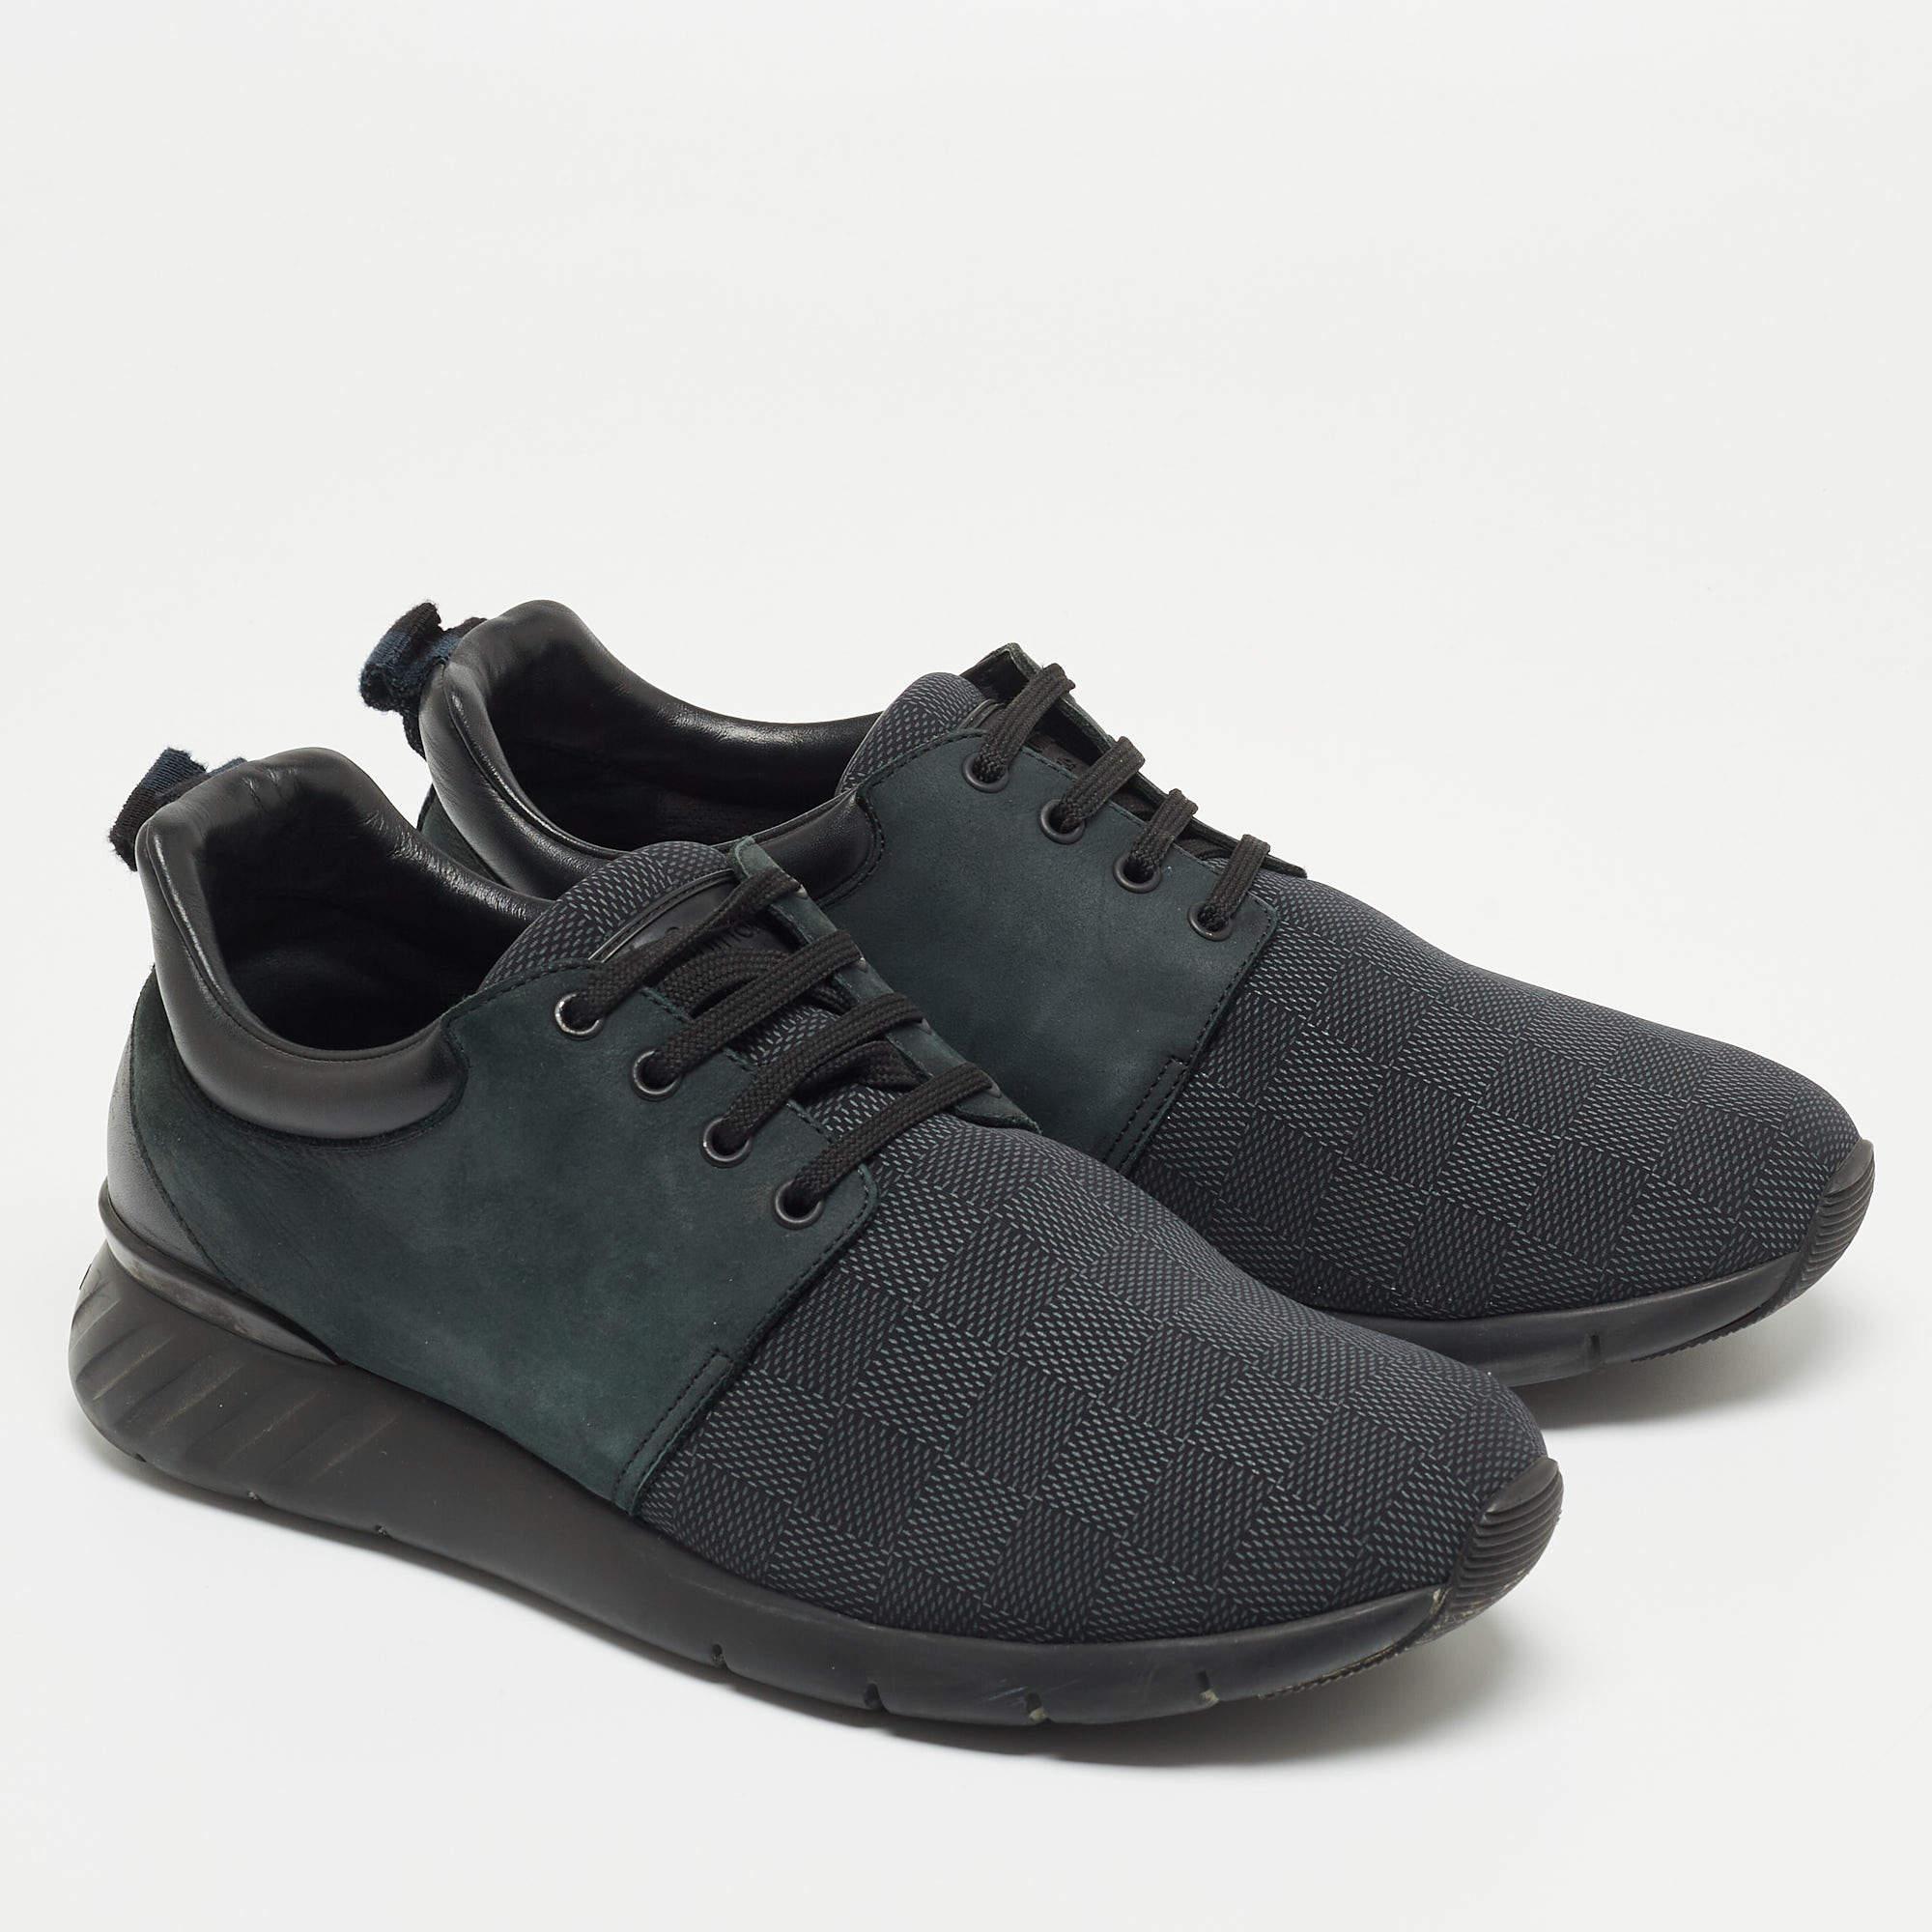 Men's Louis Vuitton Black/Green Leather and Nylon Fastlane Sneakers Size 41